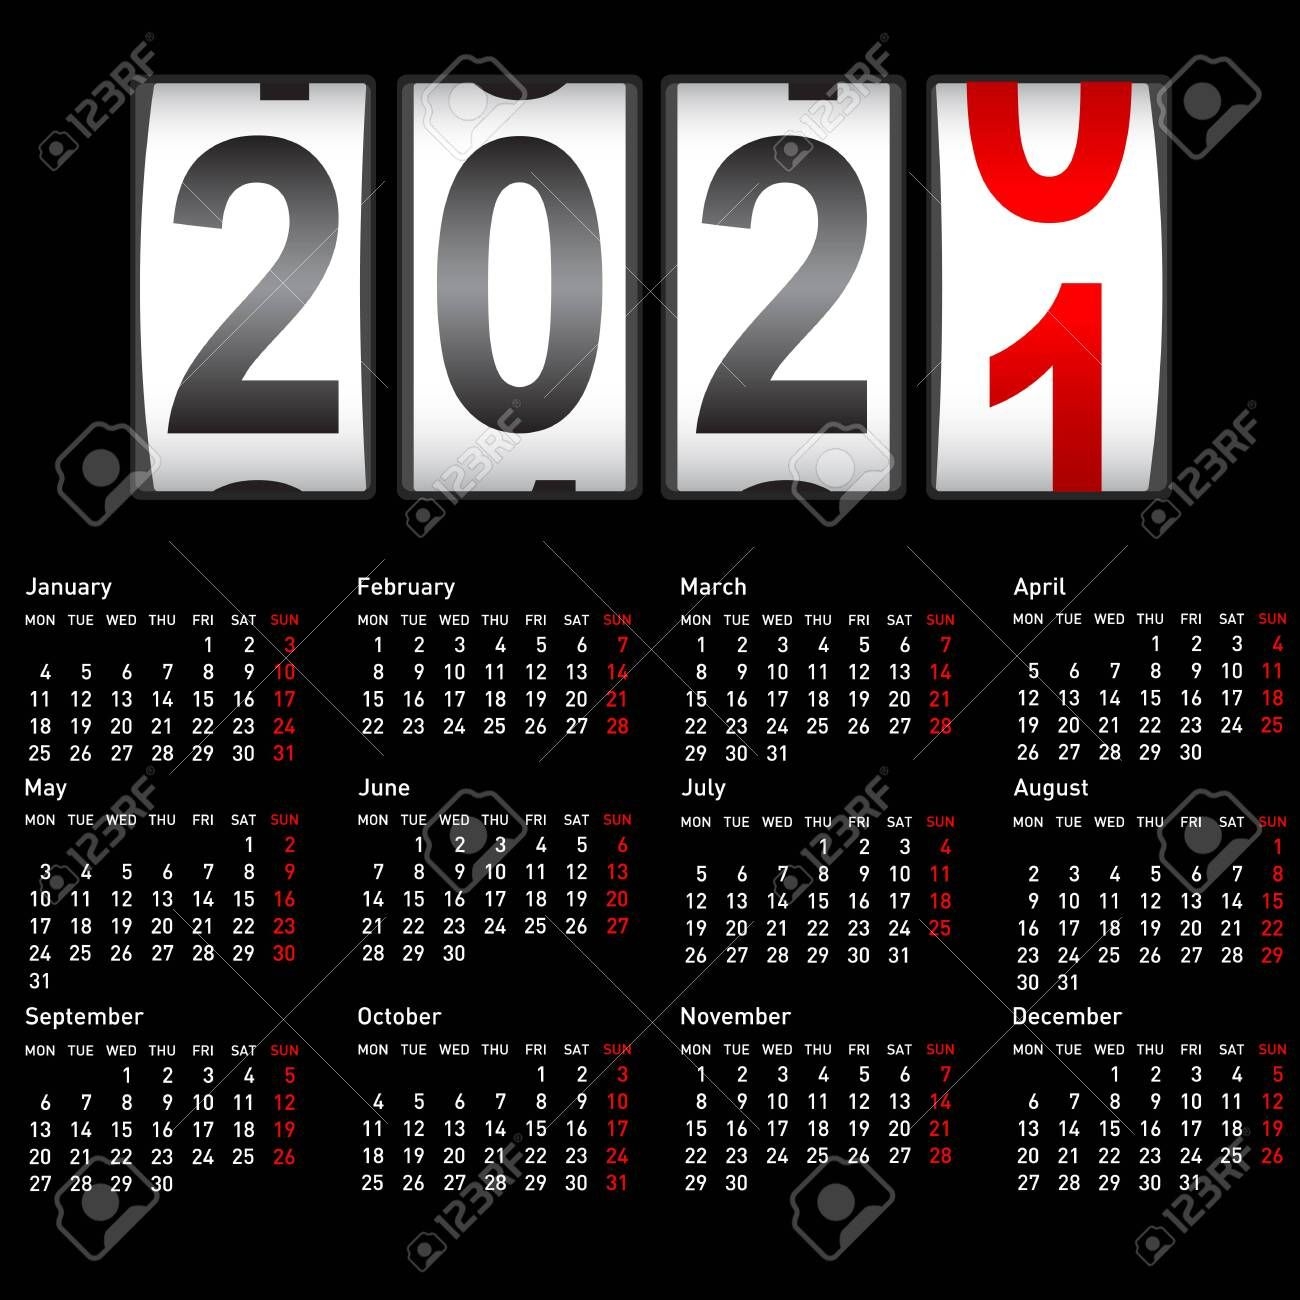 2021 New Year Counter, Change Calendar Illustration.